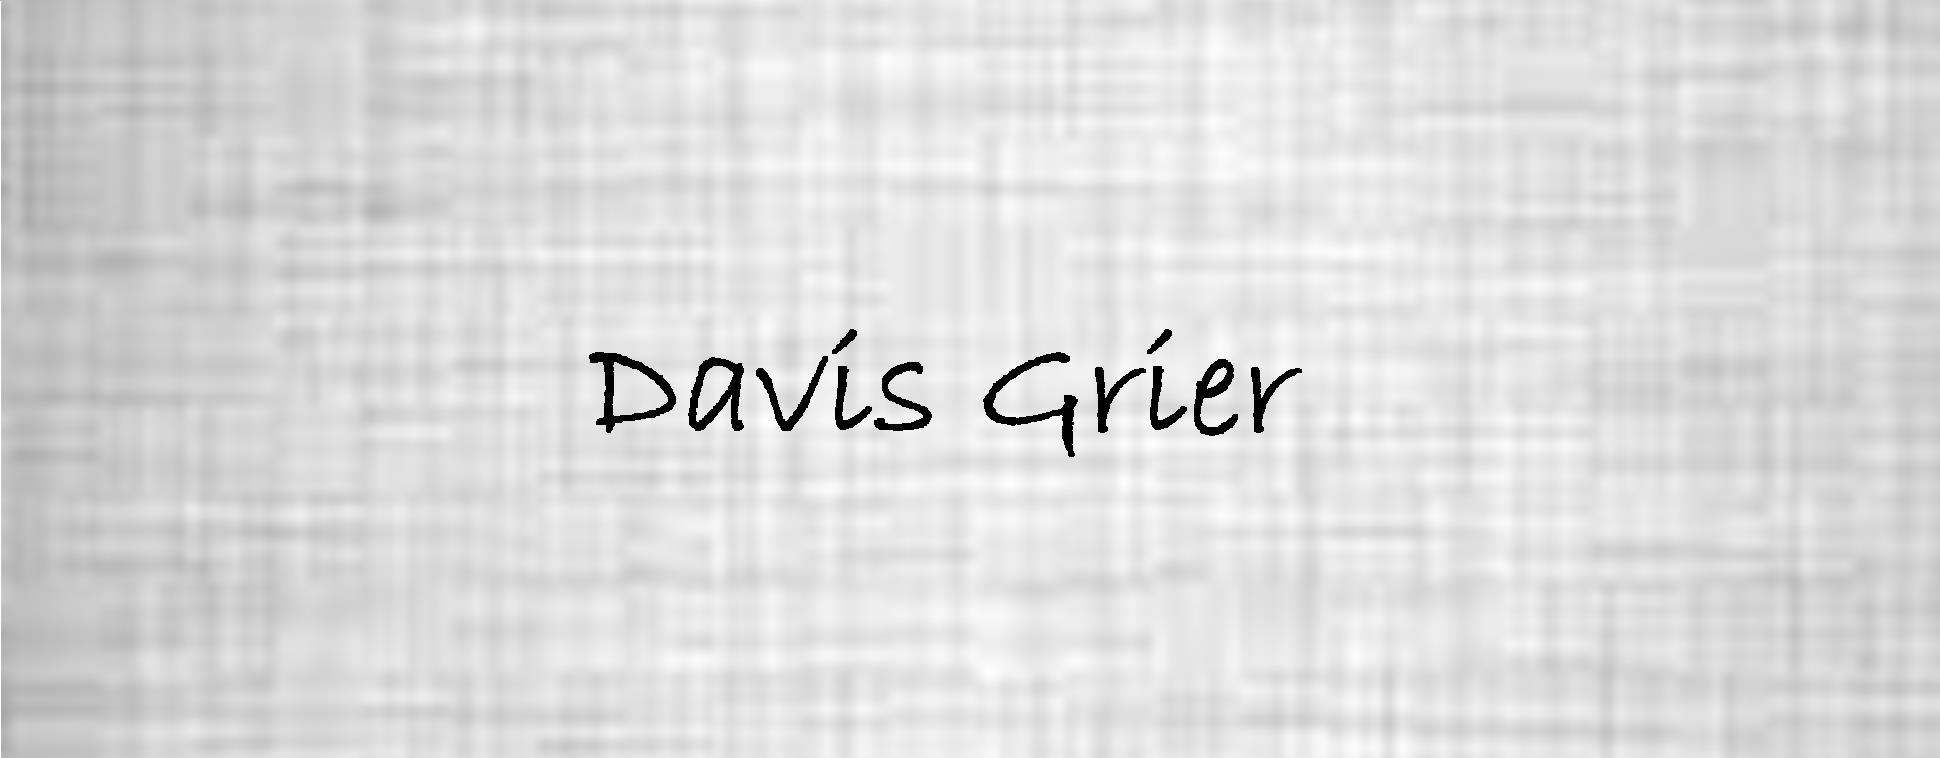 Davis Grier.jpg